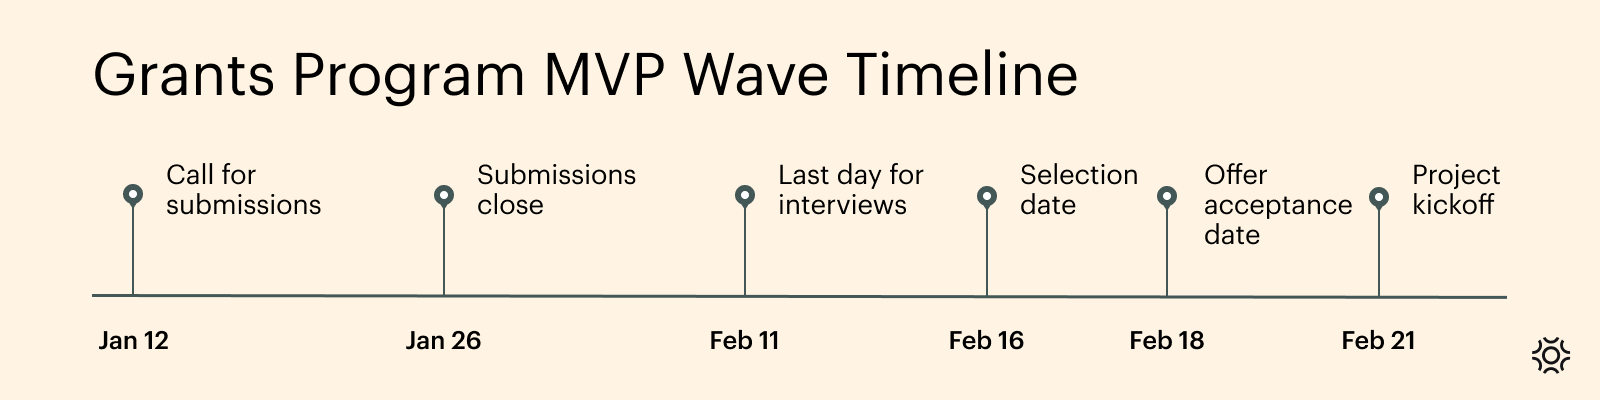 Timeline for Braintrust Grants Program MVP Wave